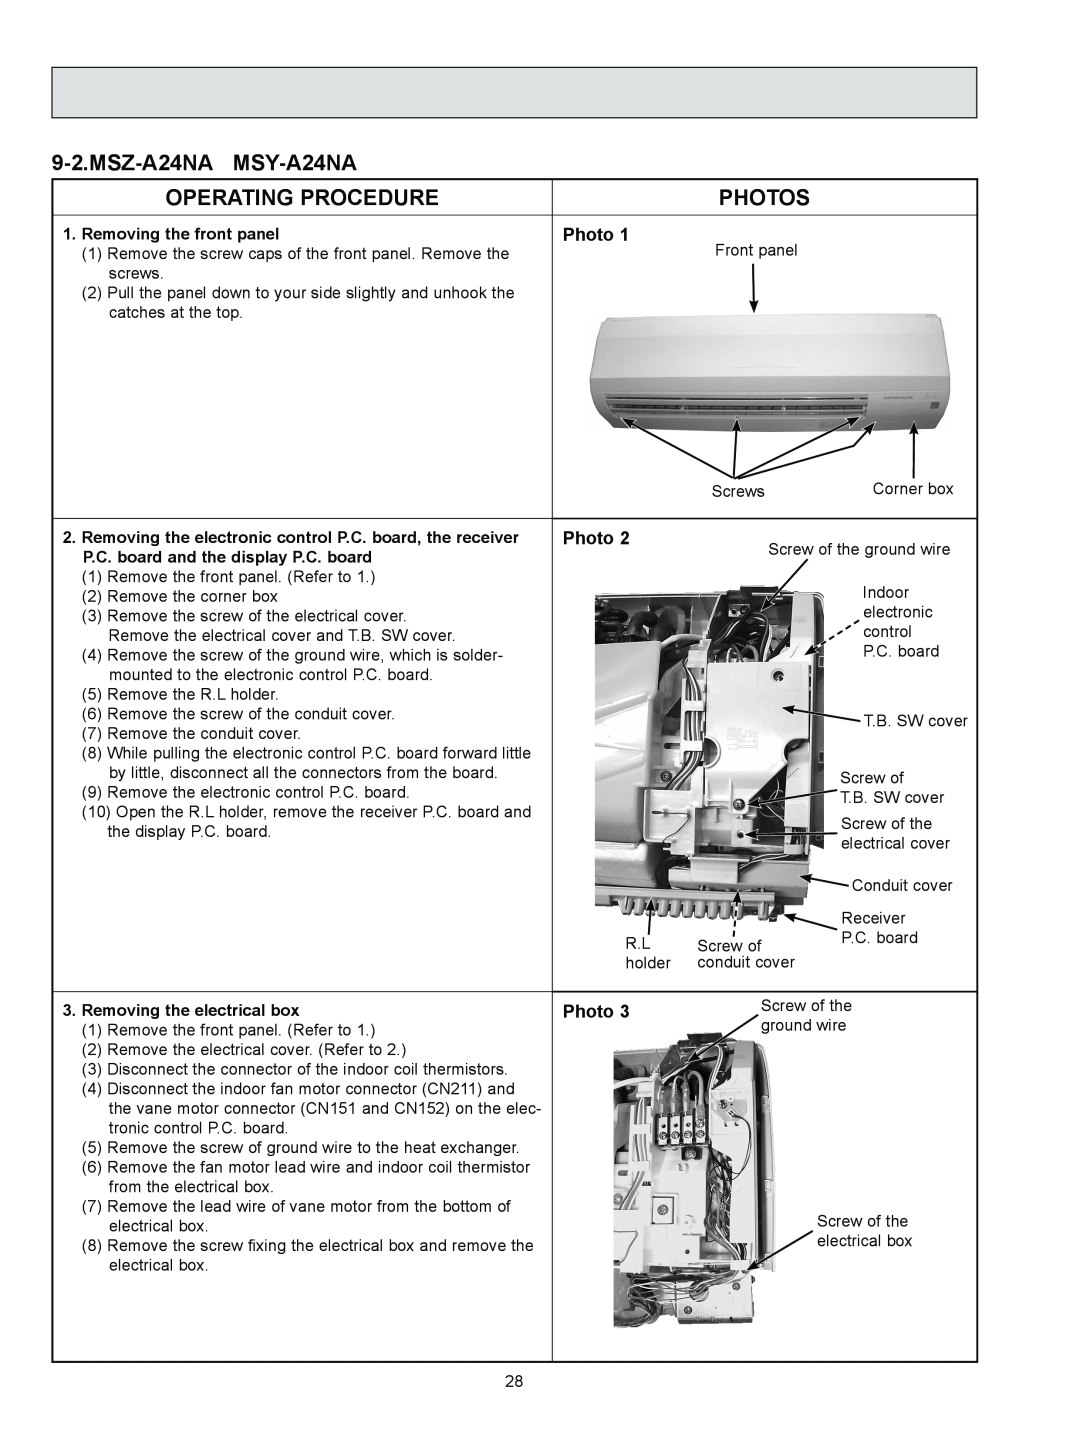 Logitech OB450 REVISED EDITION-B, MSZ-A09NA service manual MSZ-A24NA MSY-A24NA, Operating Procedure, Photos 